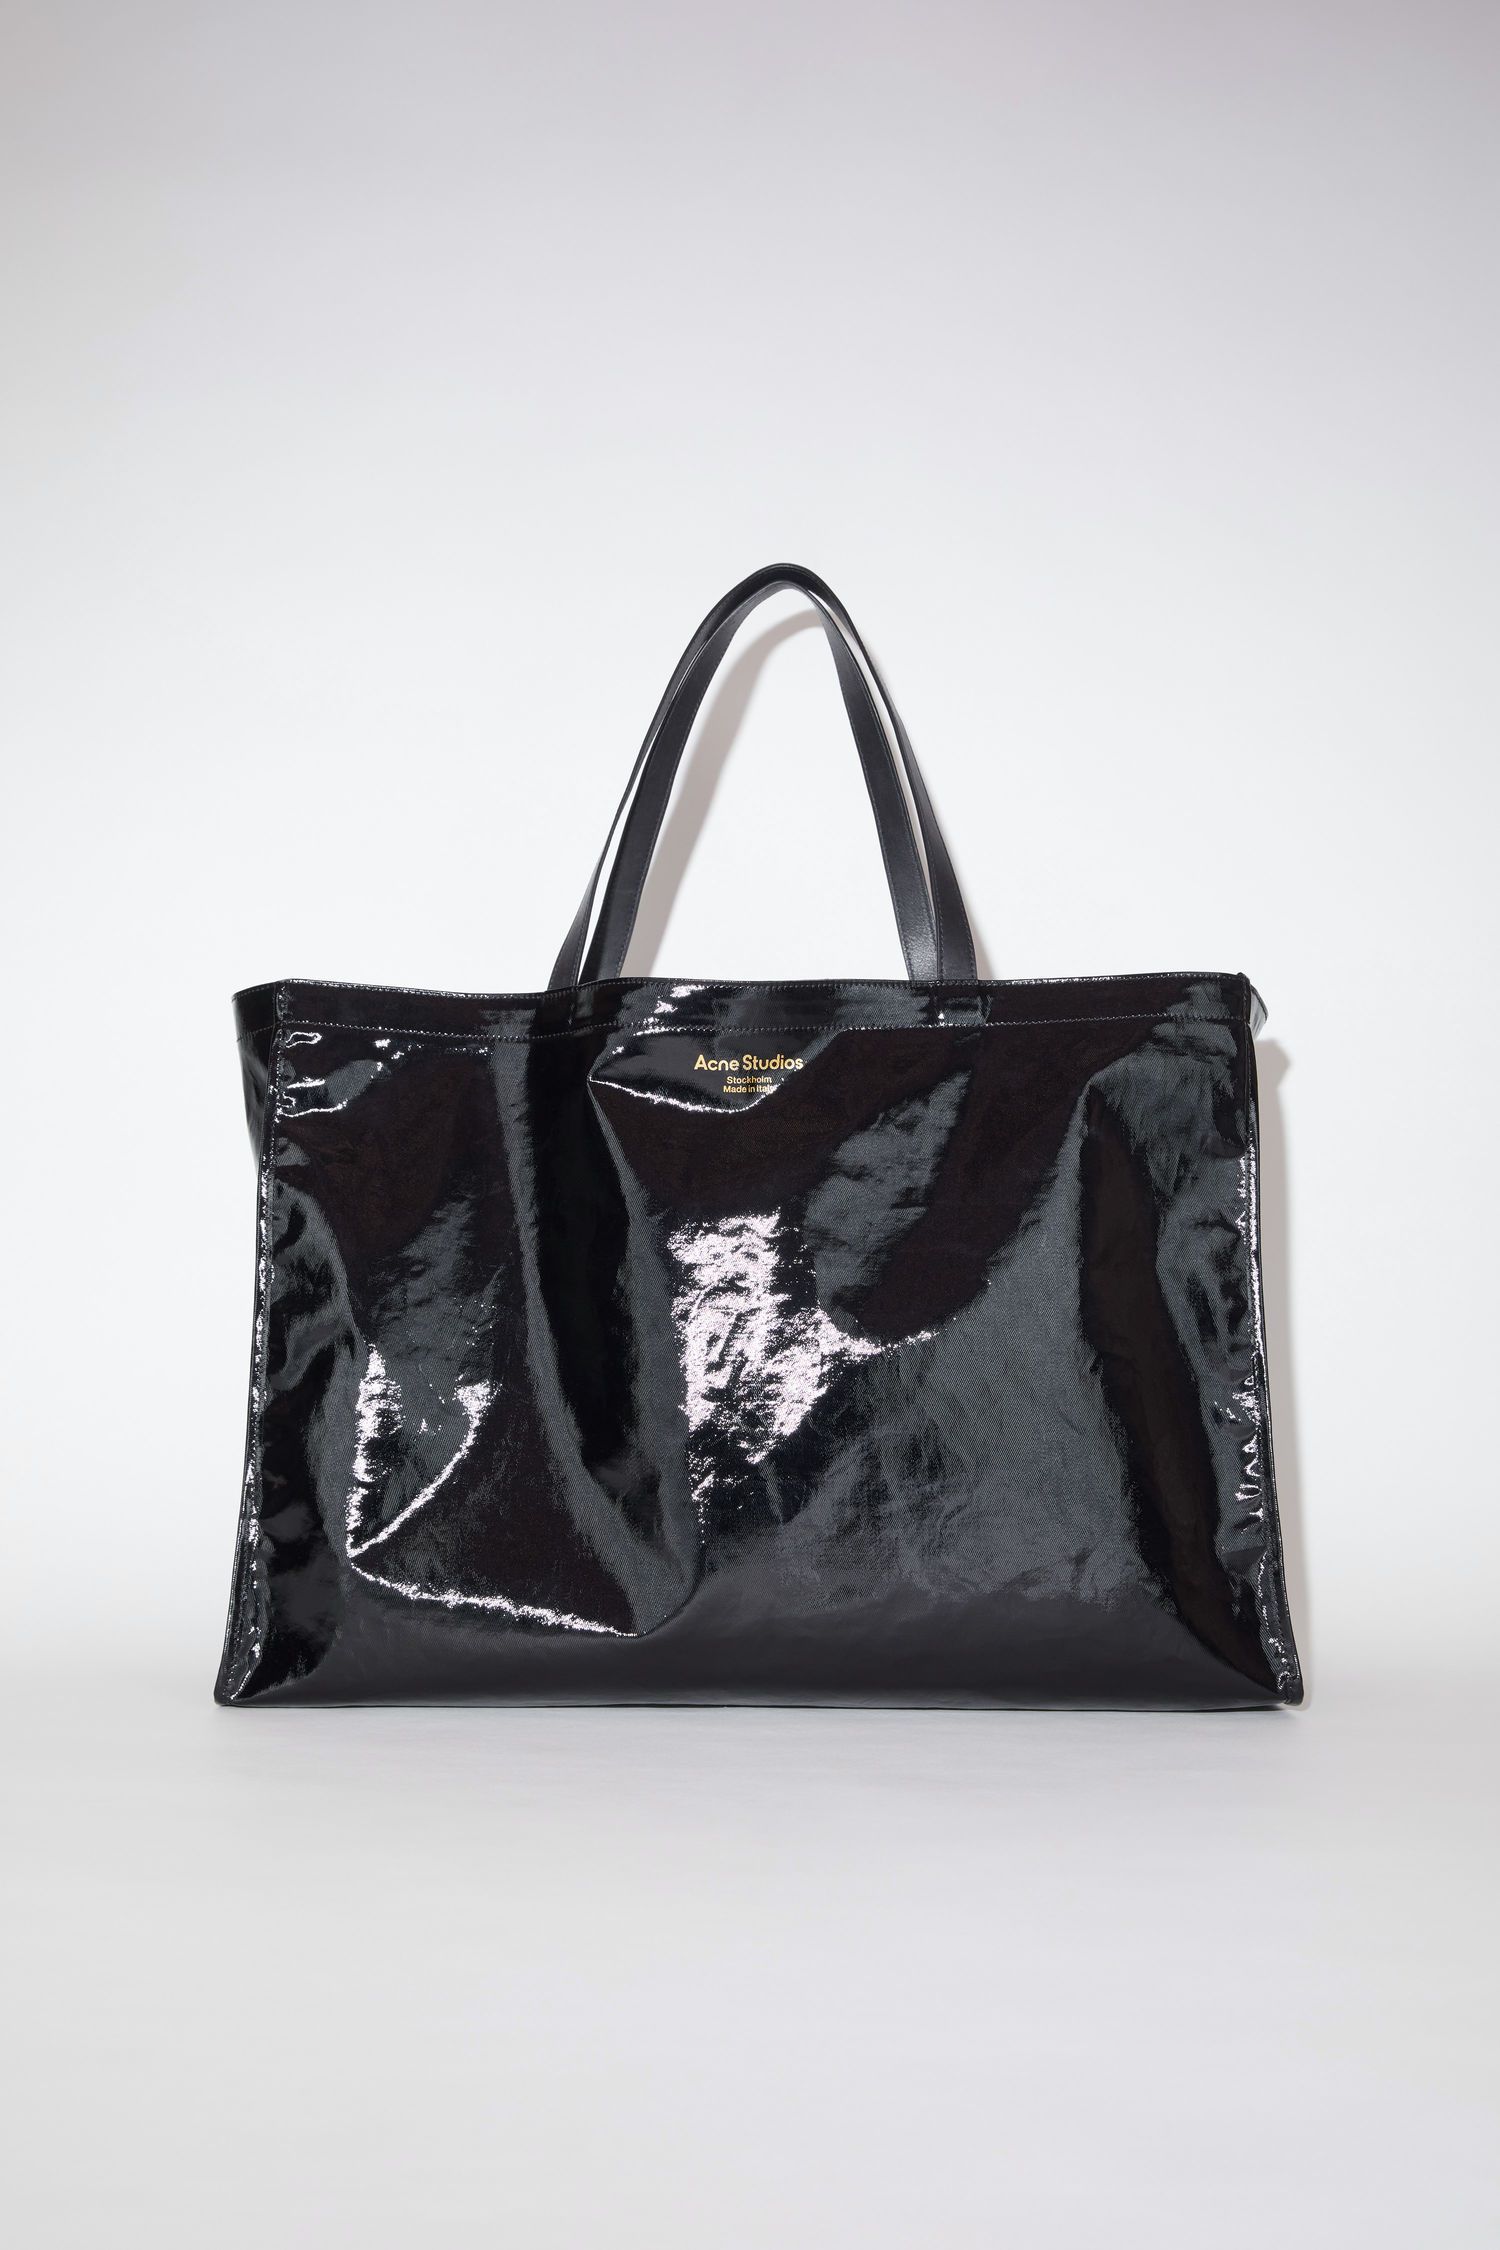 Cute PU Leather Cat Shoulder Bag For Women HBP Fashion Handbag Purse In  Black From Ao91, $108.81 | DHgate.Com